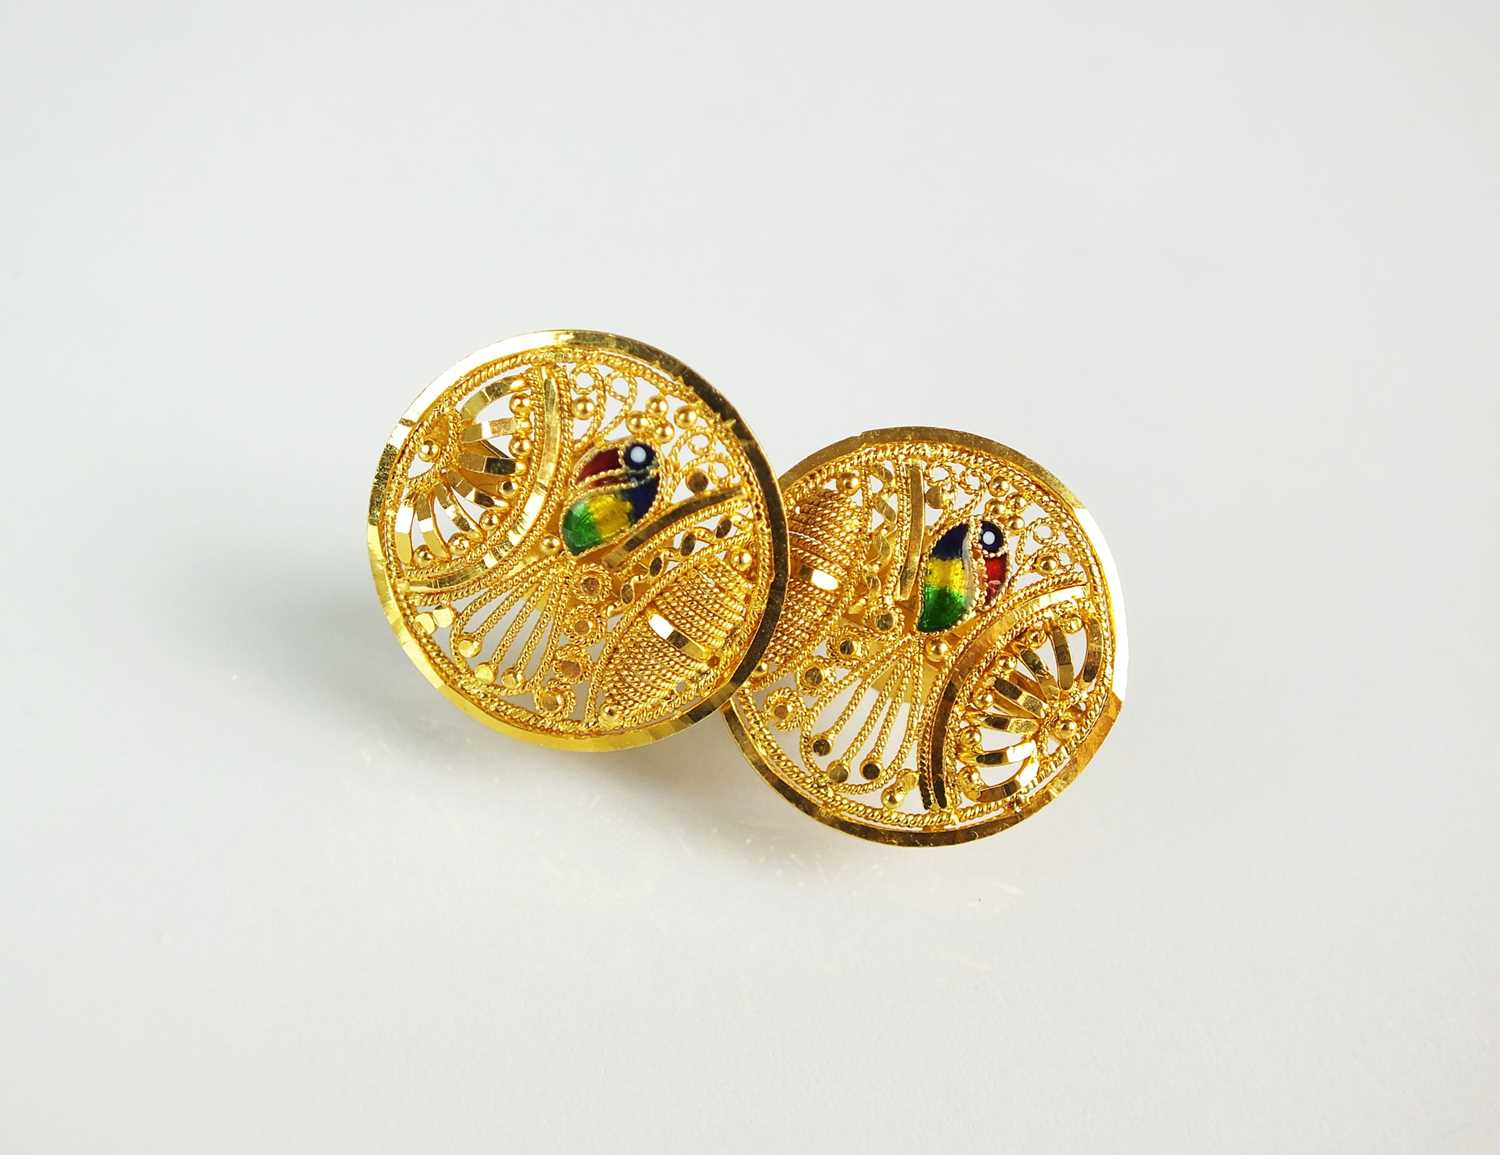 Lot 85 - A pair of yellow metal and enamel earrings